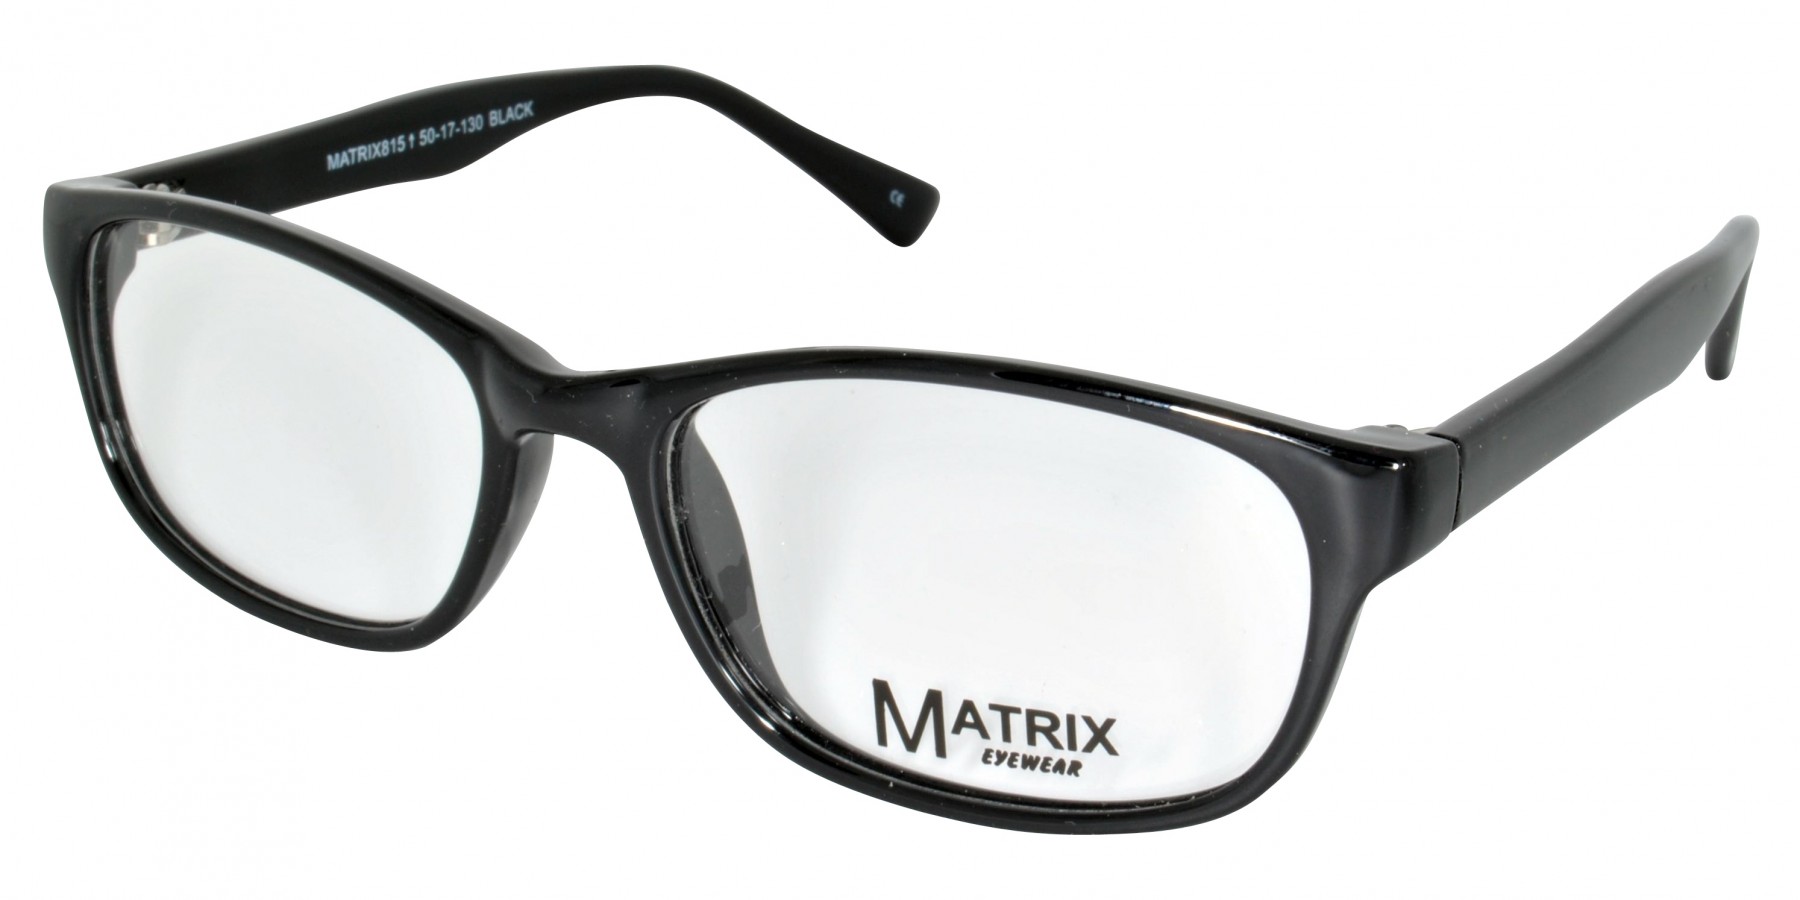 Matrix 815 Prescription Glasses